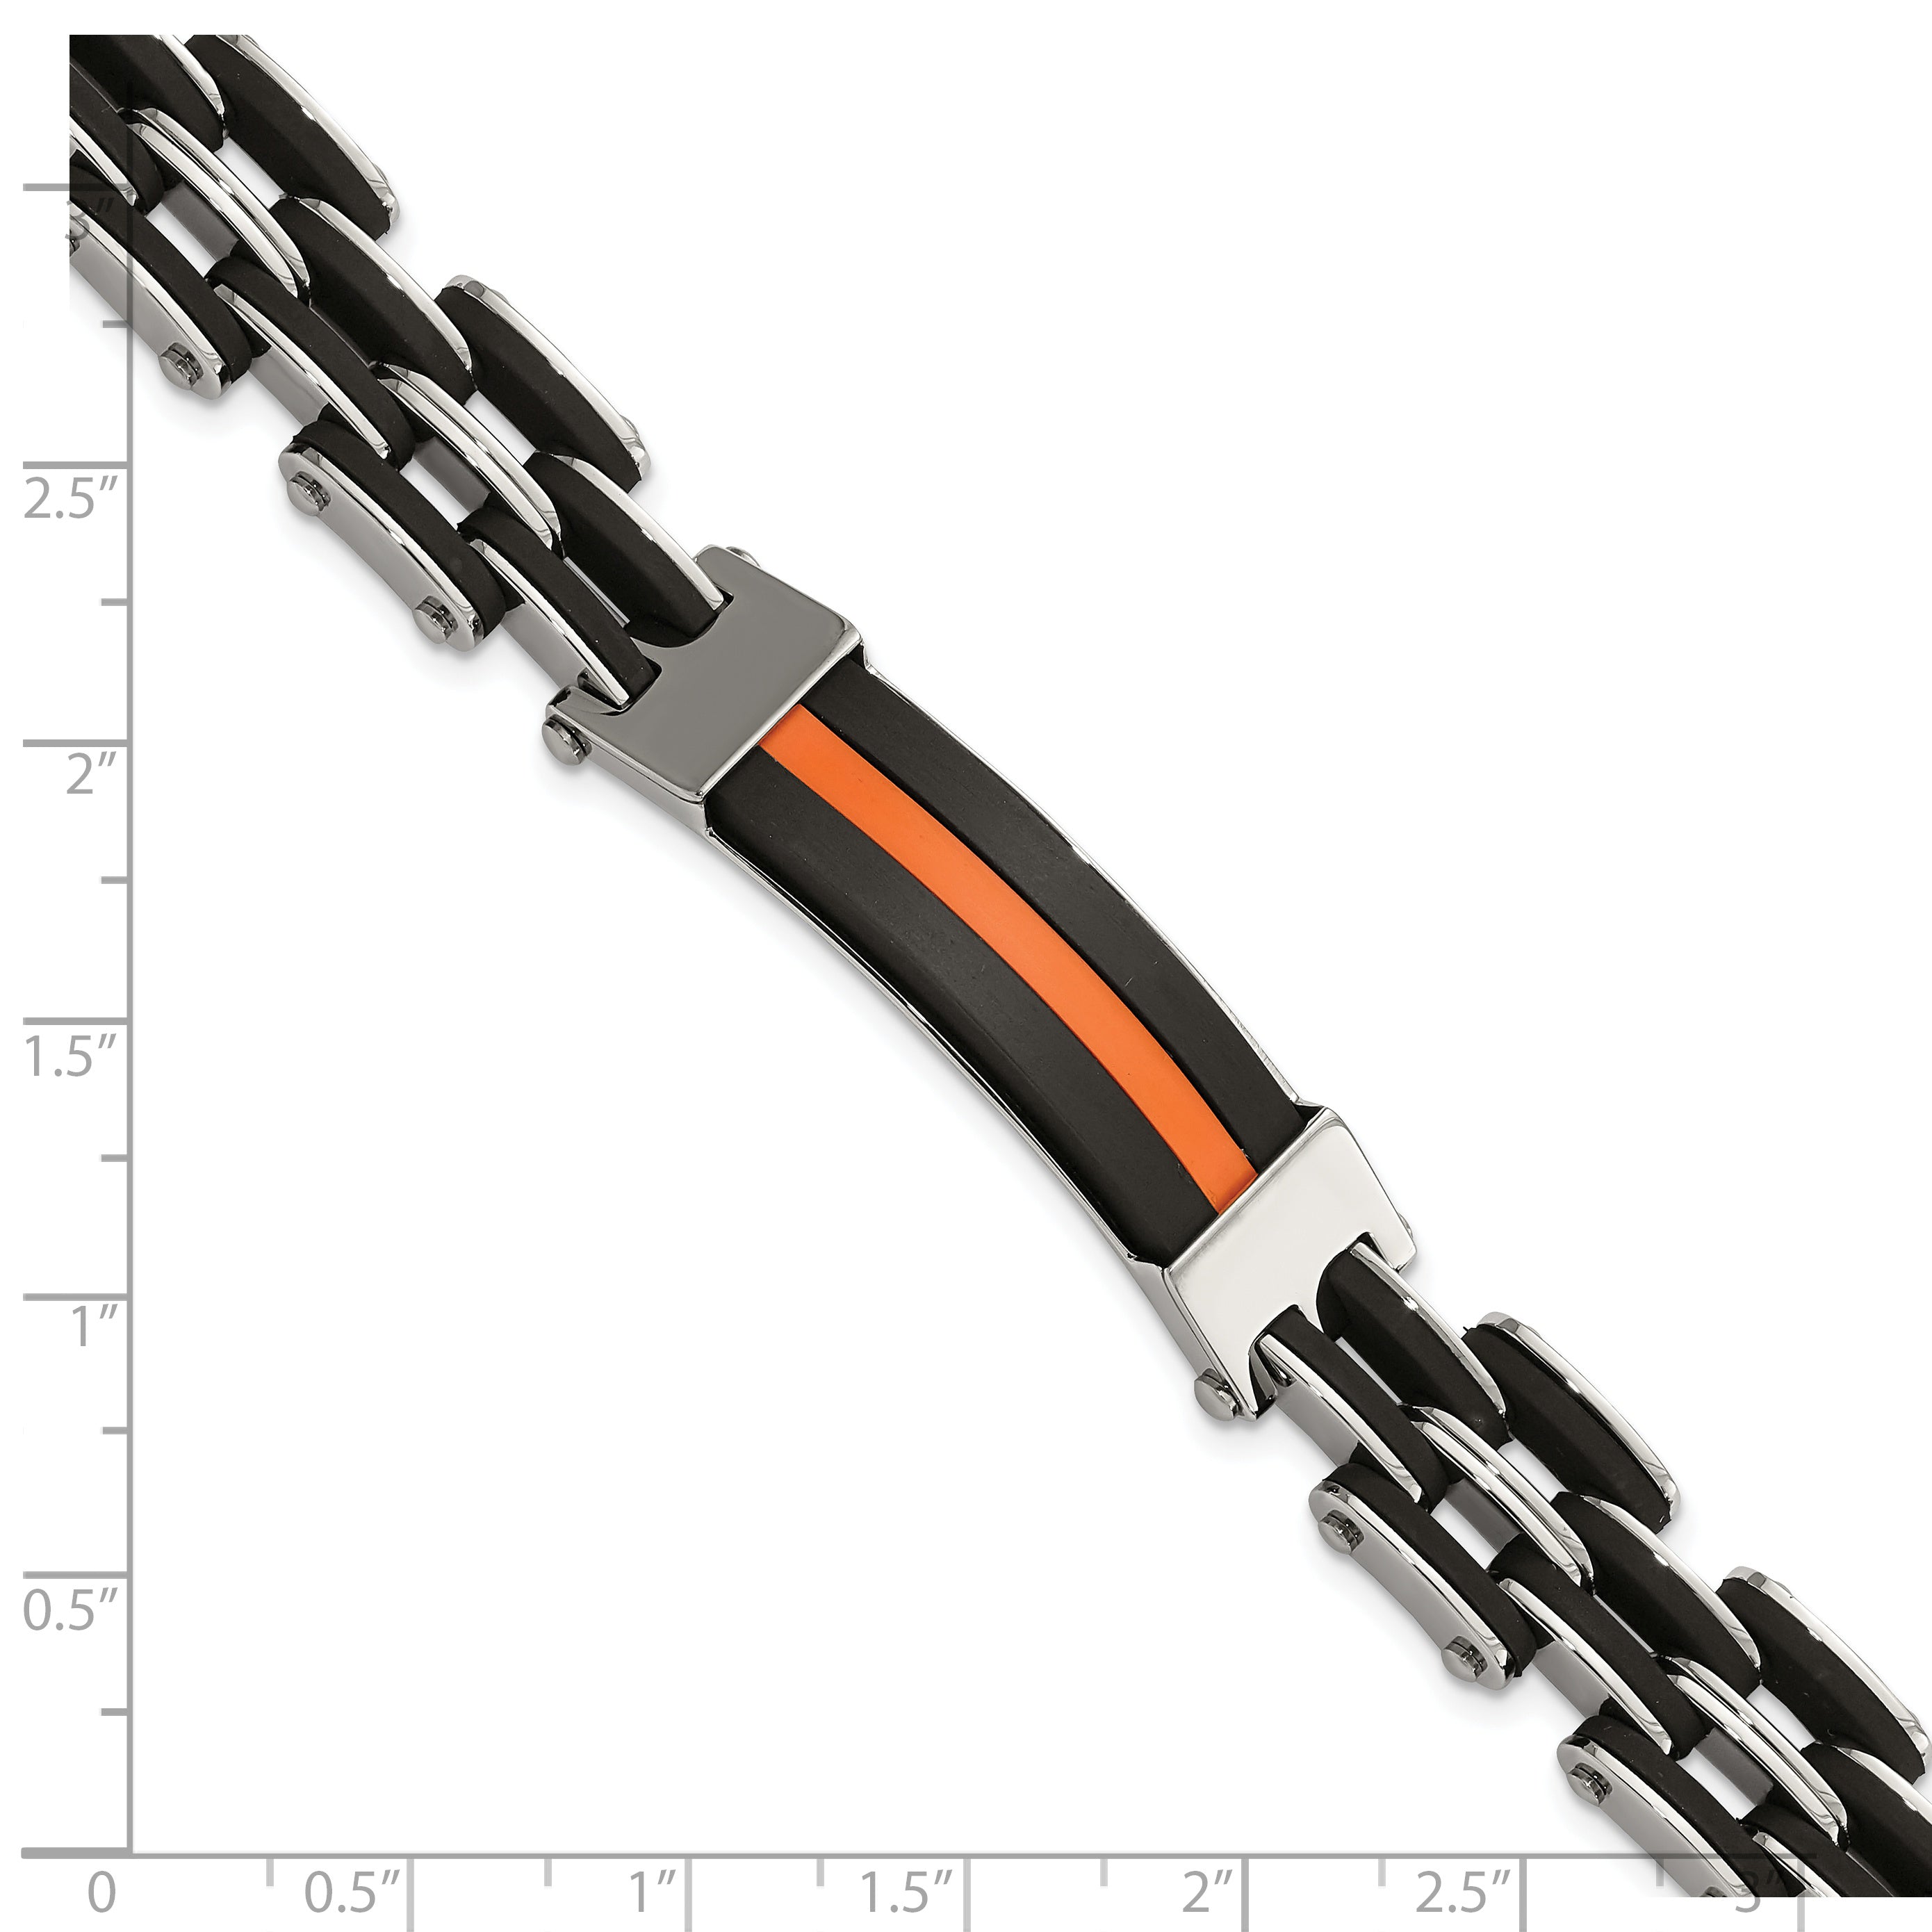 Stainless Steel Polished Black & Orange Polyurethane Link Bracelet